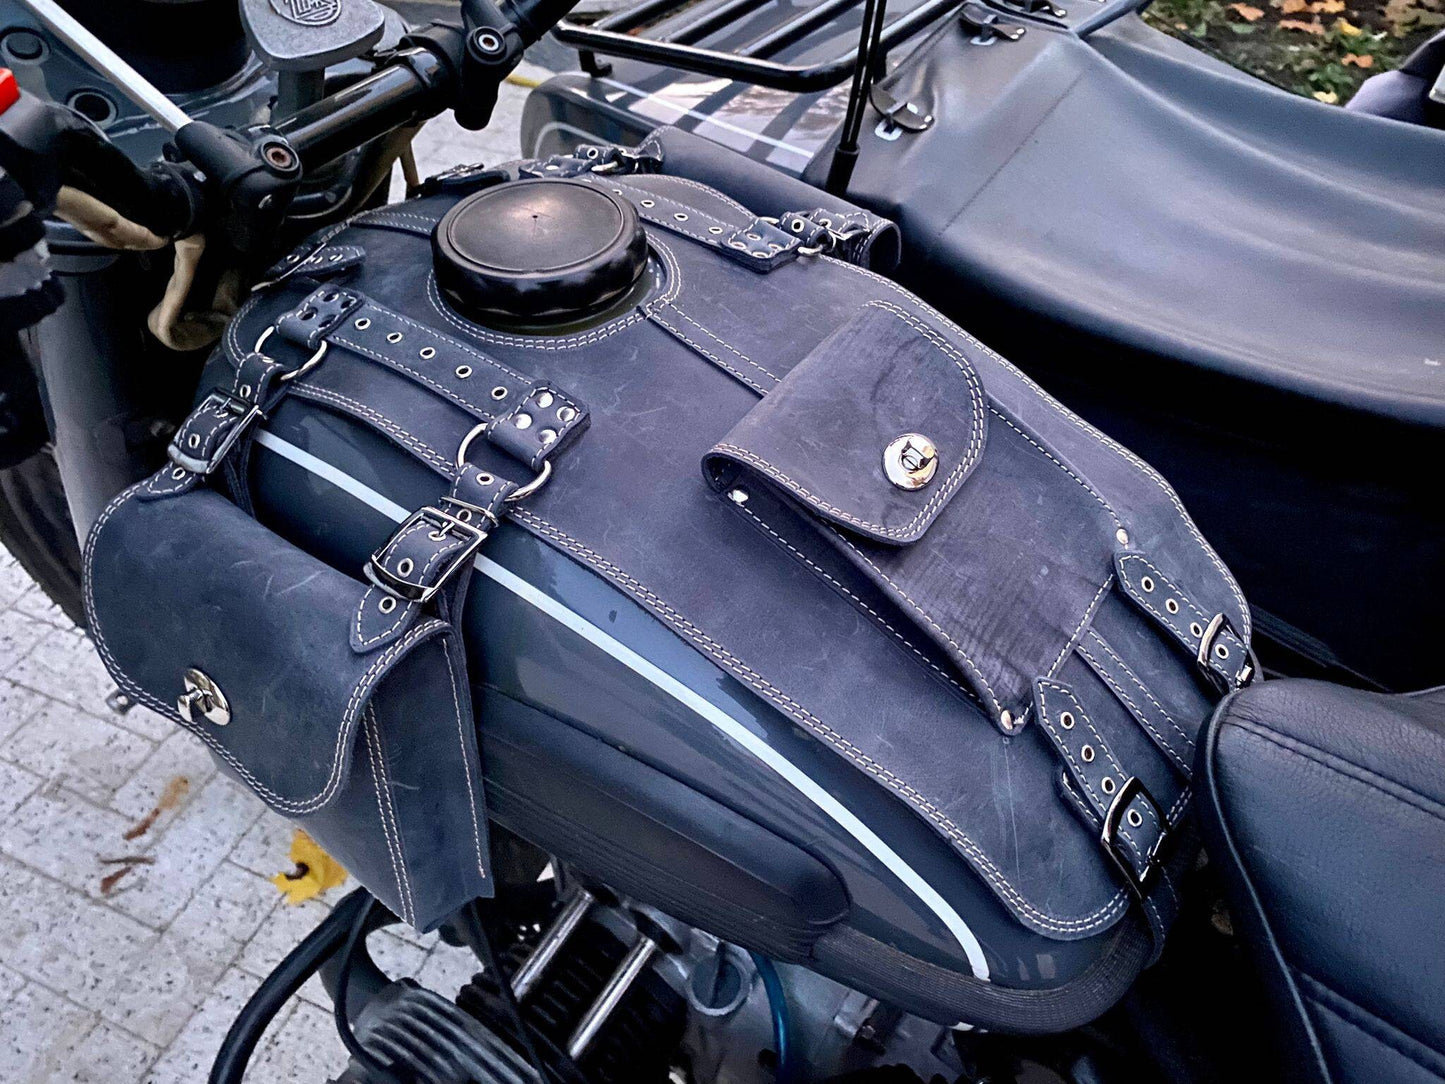 Ural fuel tank leather cover bags- Black, Ural fuel tank gas bags genuine leather, crazy horse leather tank cover- black, Ural tank cover, Ural tank bags